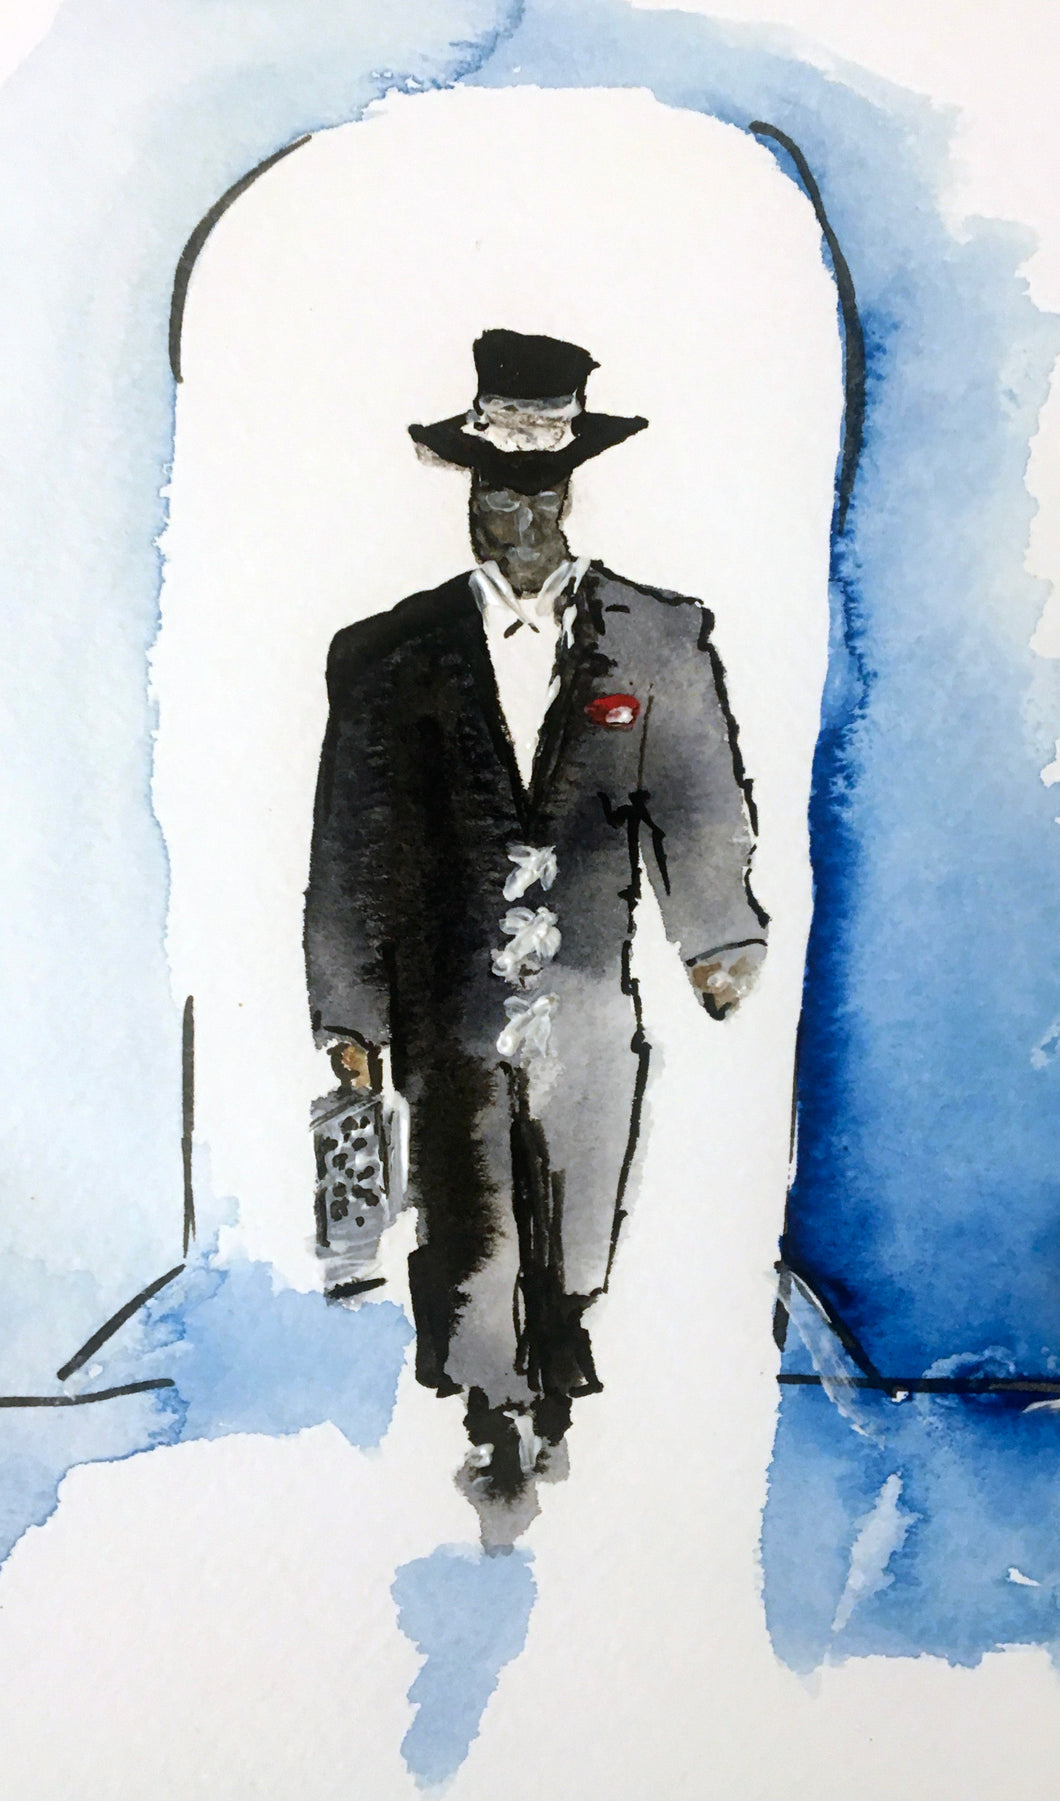 LOUIS VUITTON - A/W '21  Paris Menswear - look #1 illustration from film still of Saul Williams